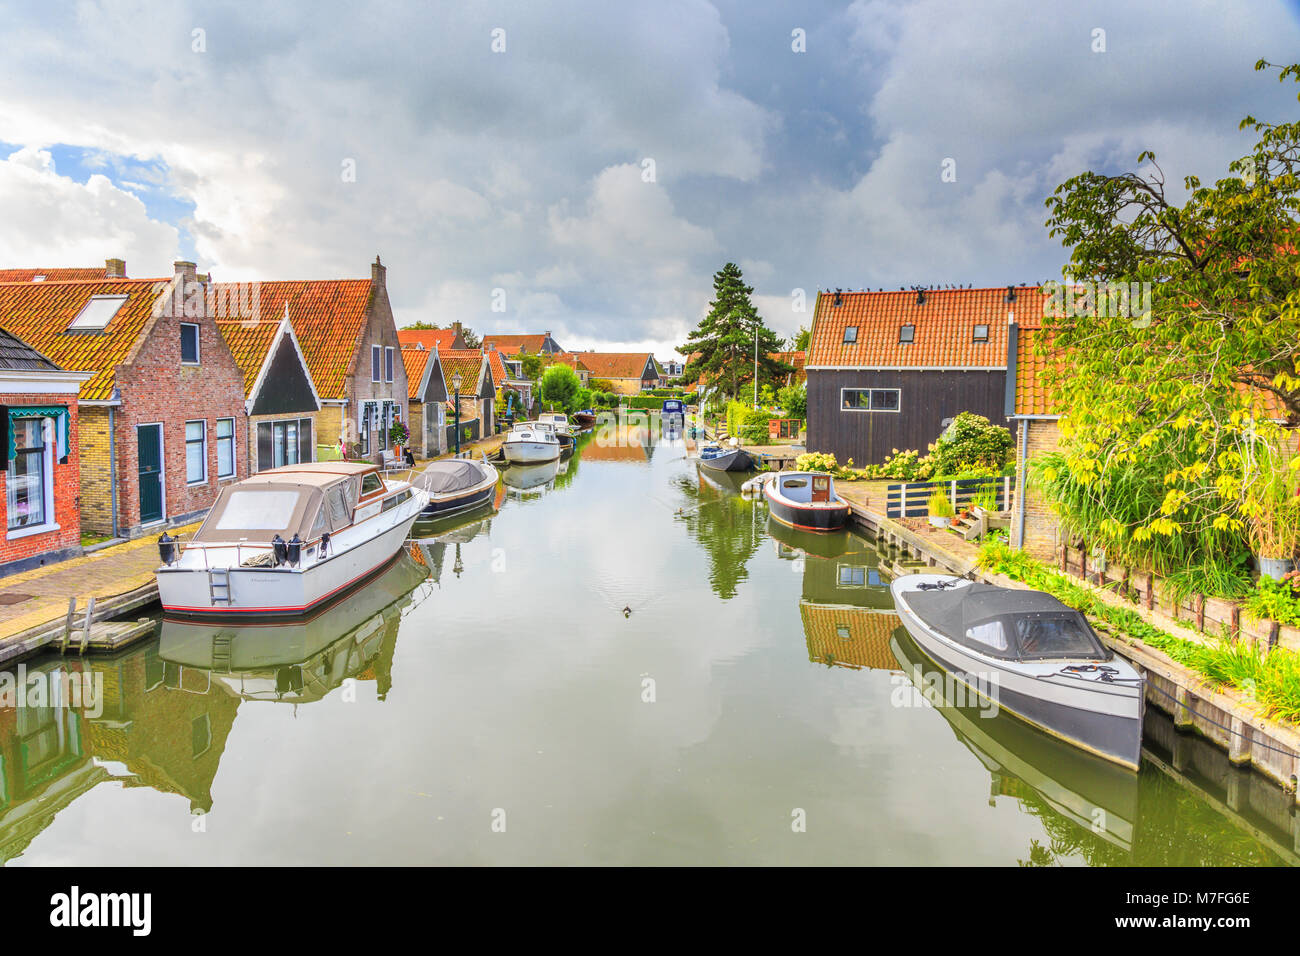 De Zijlroede, Hindeloopen, provincia di Friesland, comune di Súdwest Fryslân, Paesi Bassi, 3 settembre 2017: Vista di case e imbarcazioni al canal Foto Stock